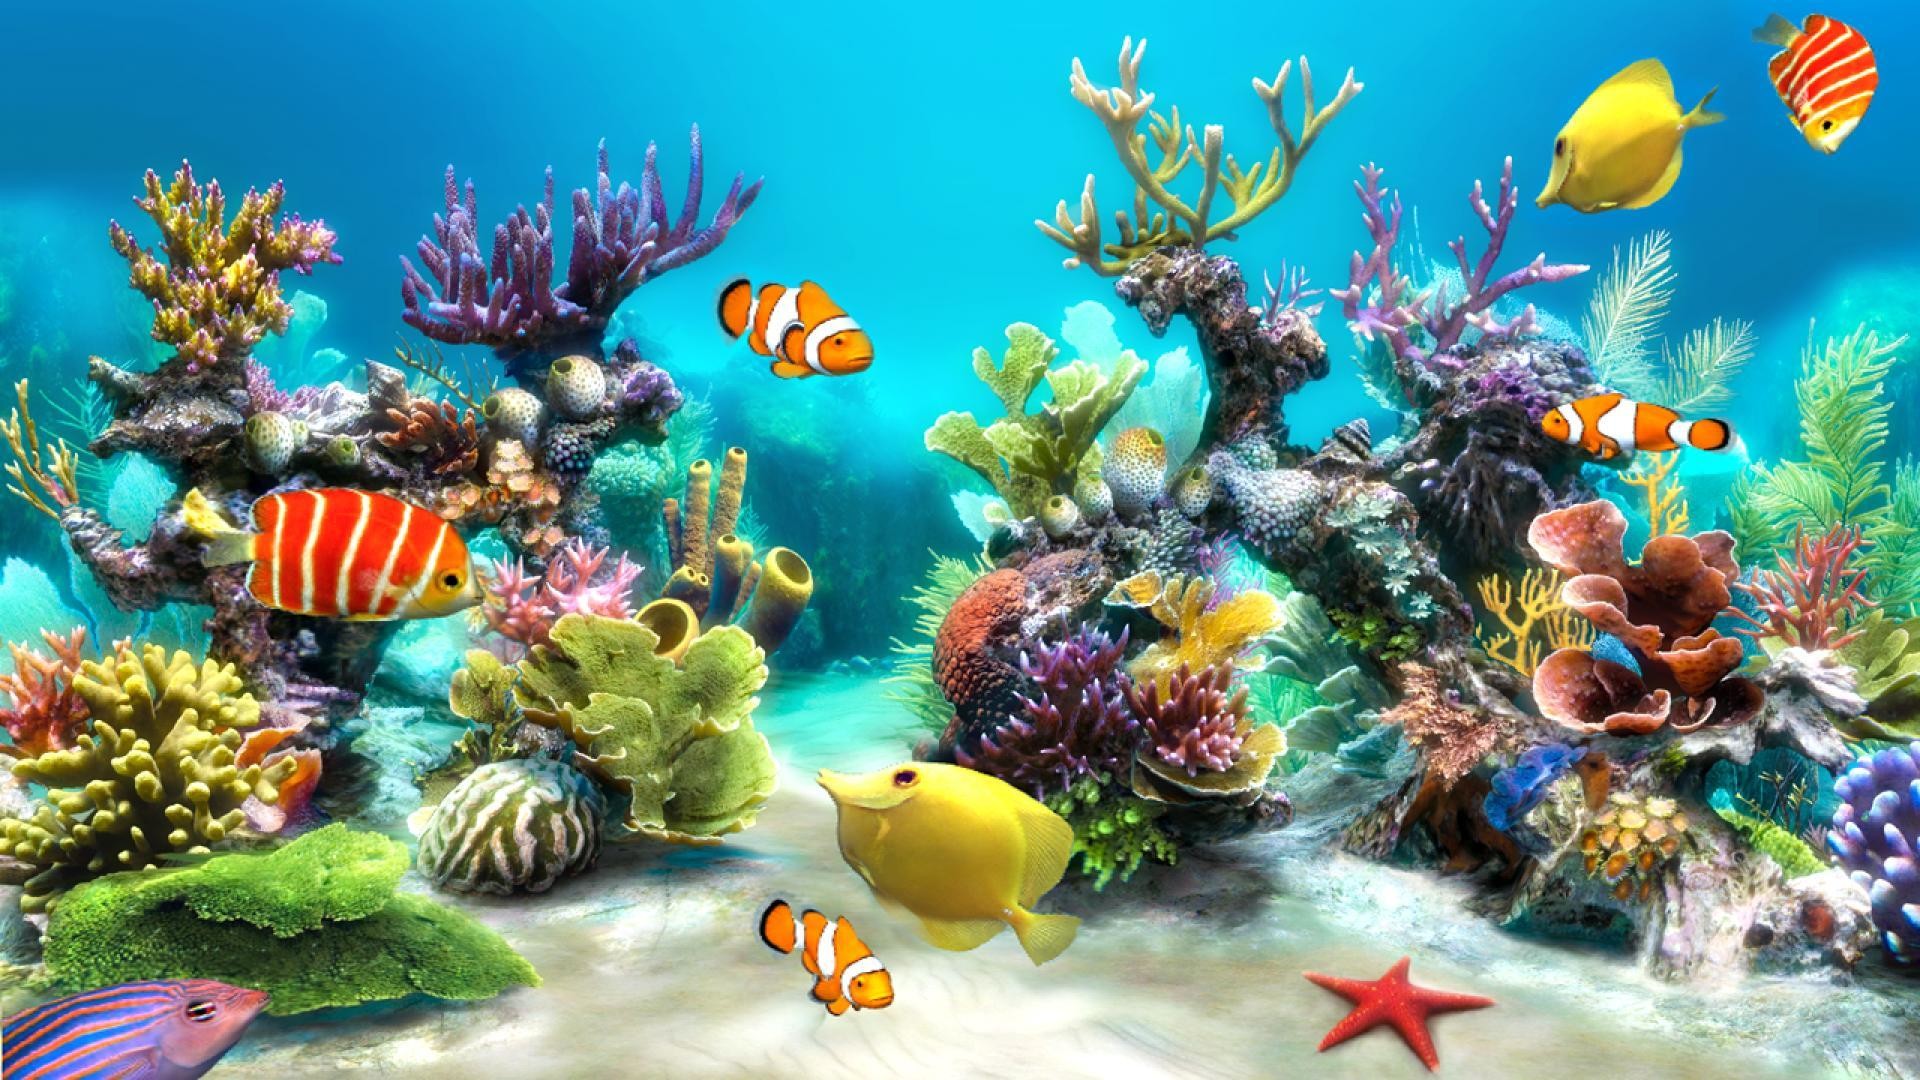 Aquarium Live Wallpaper Windows 10 (55+ images)